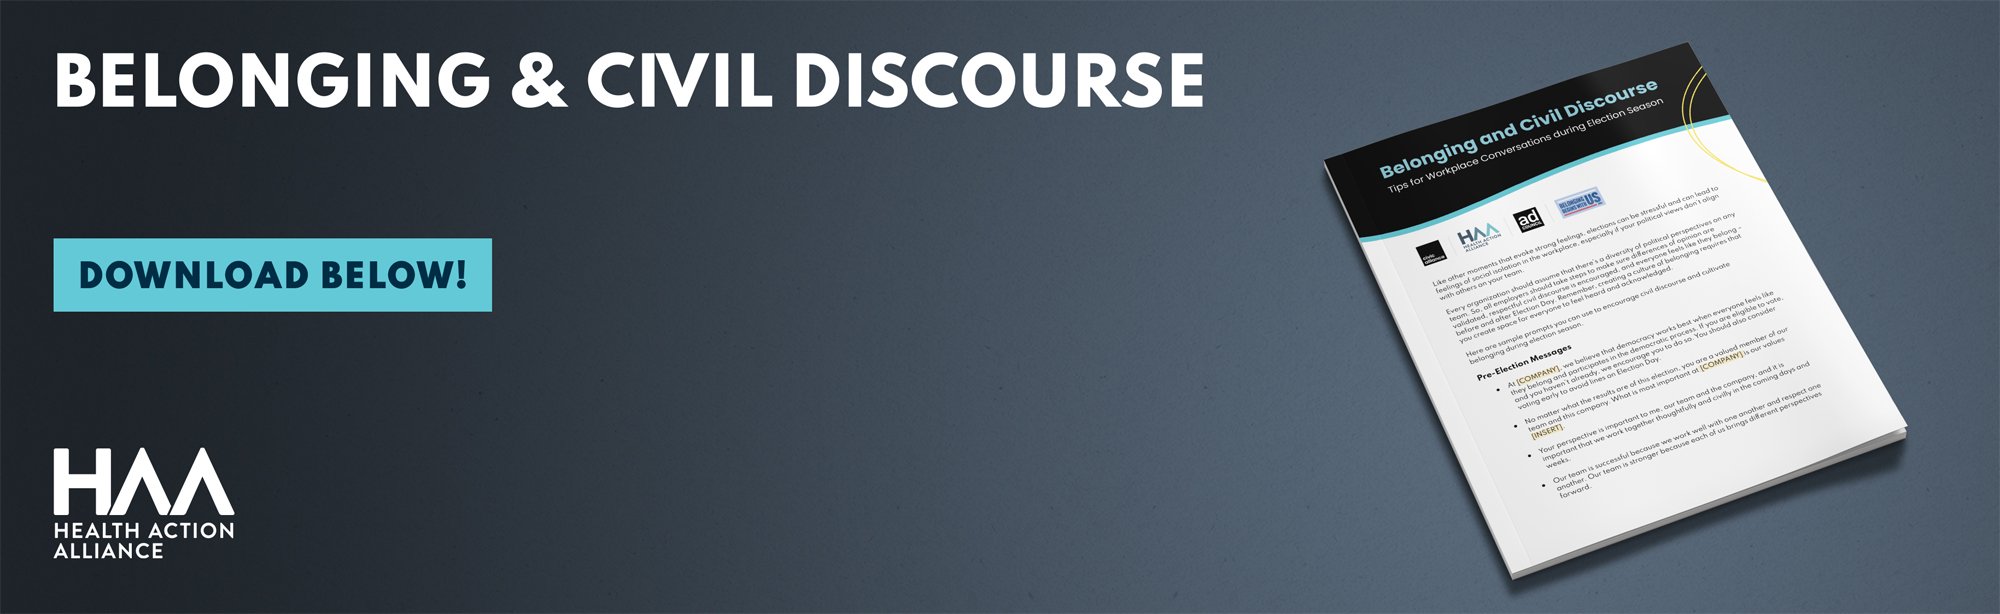 Belonging-&-Civil-Discourse-Banner